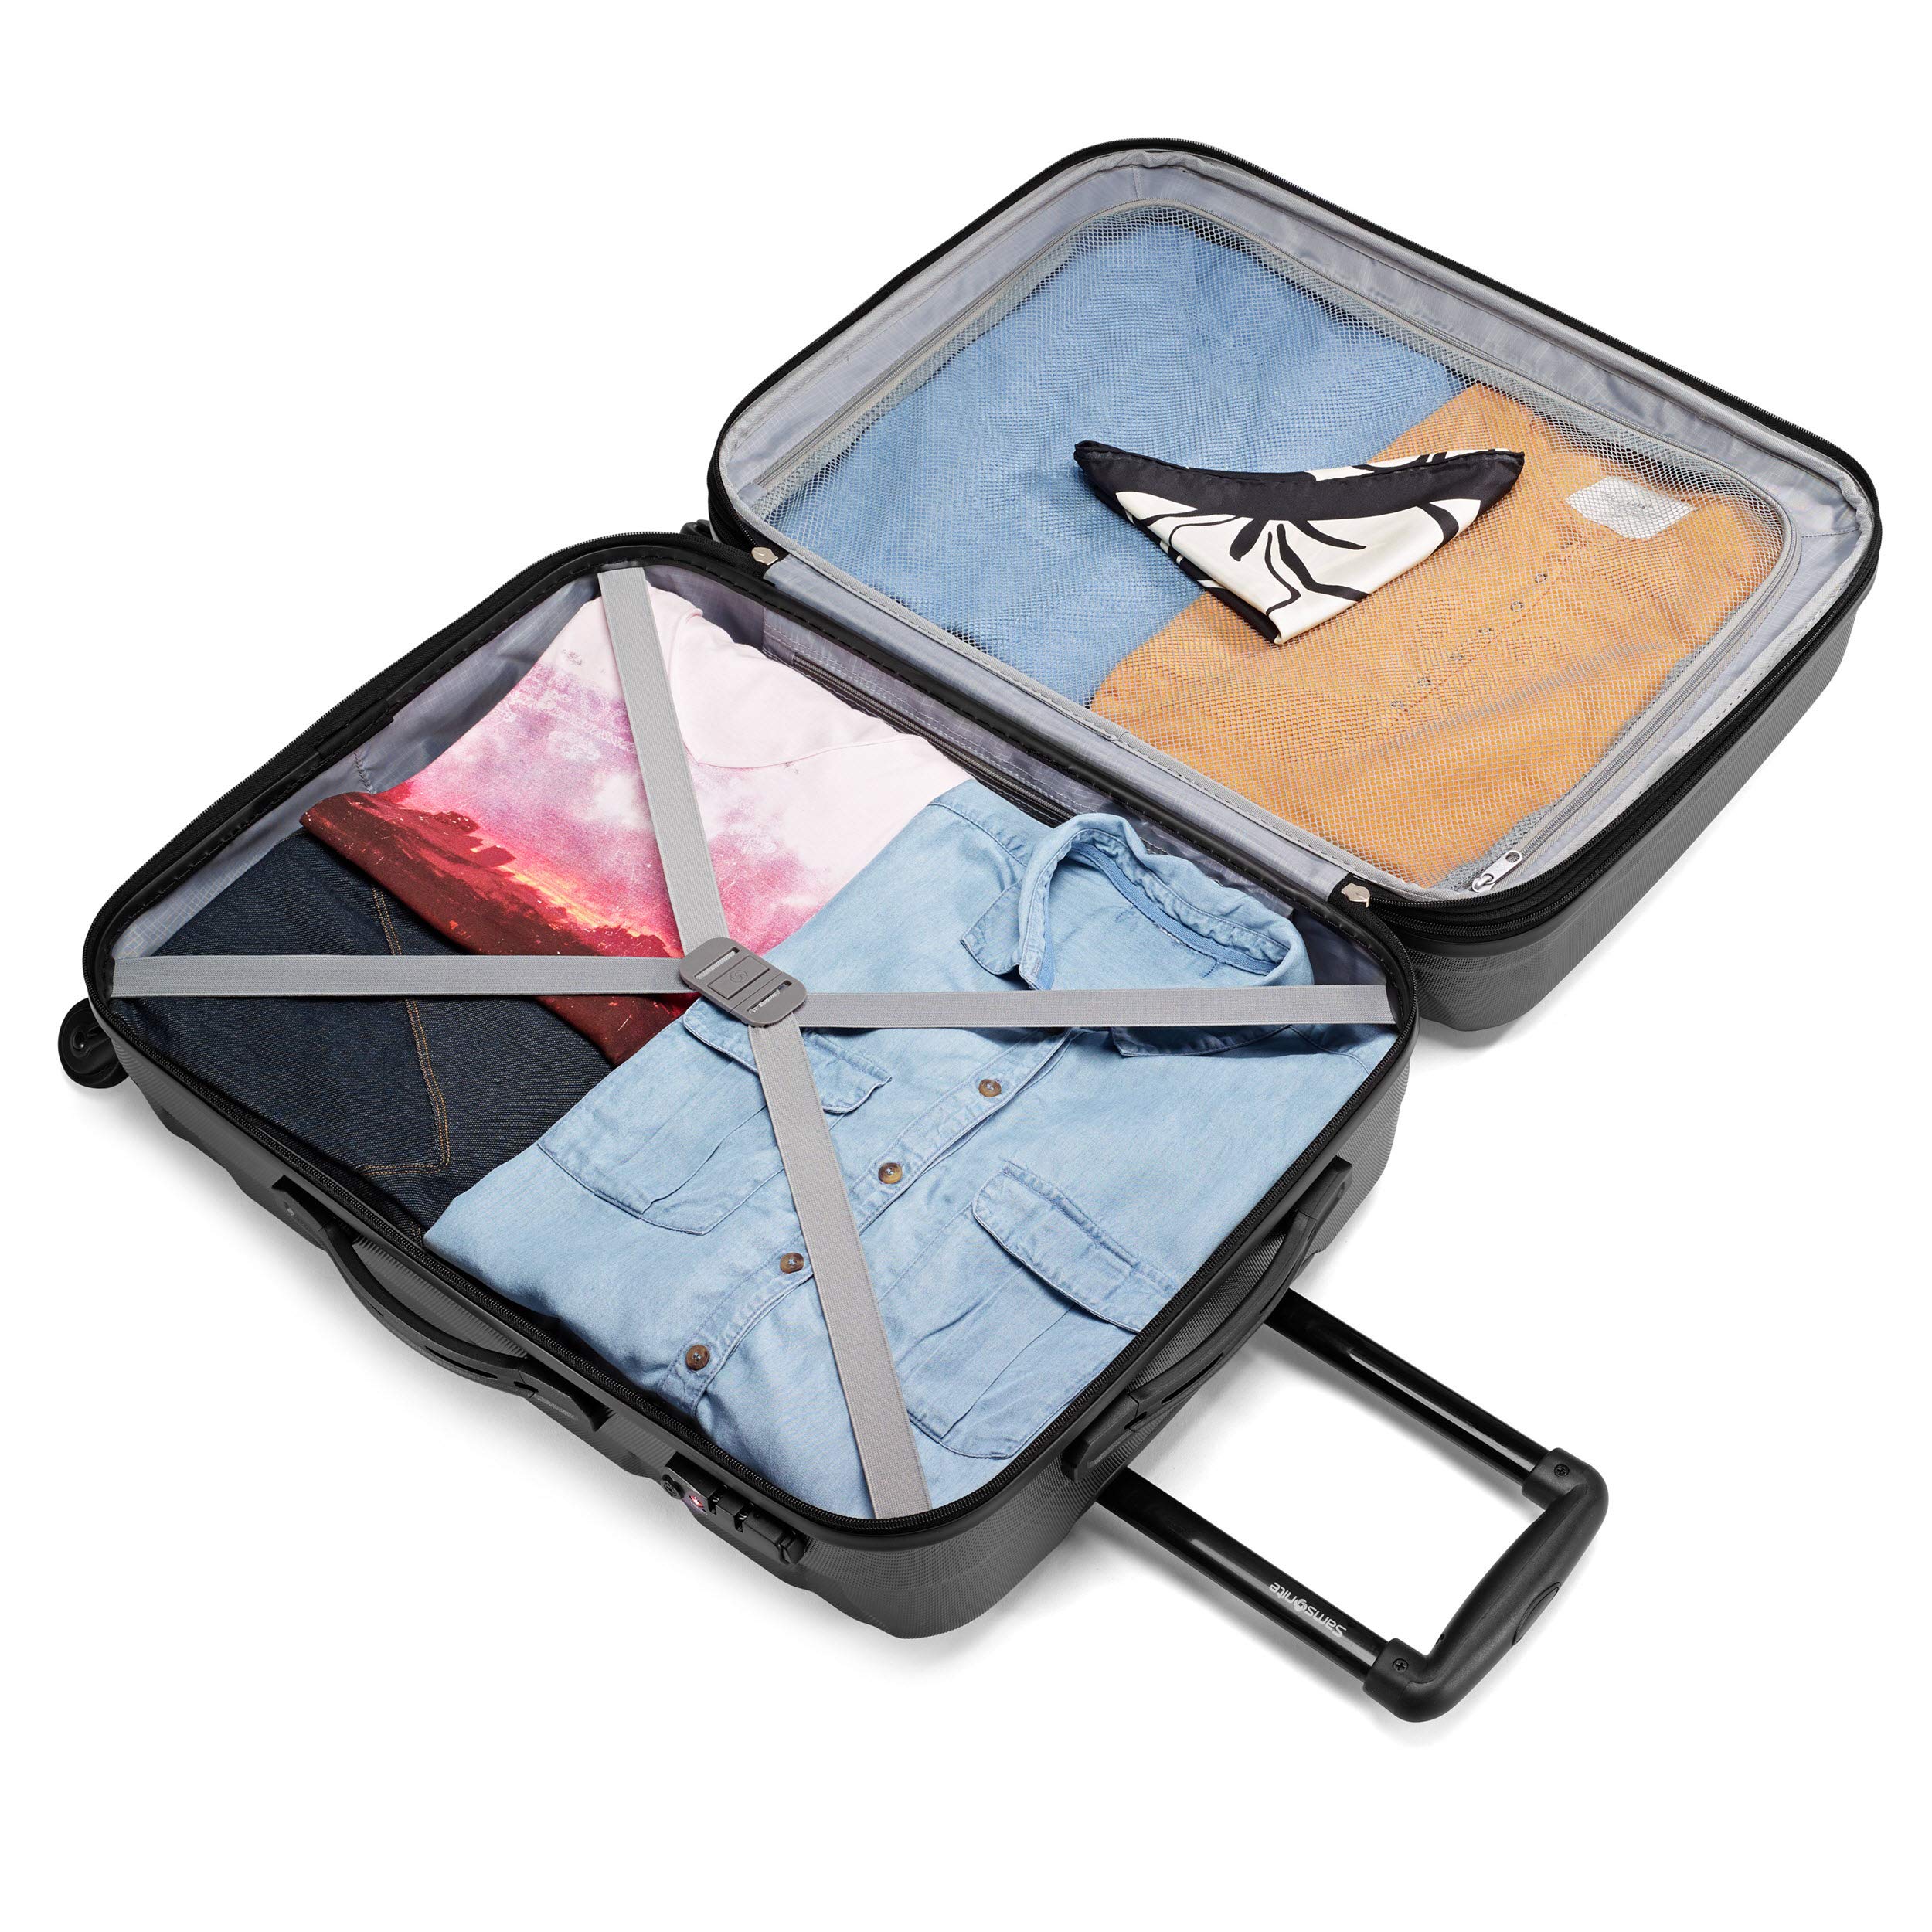 Samsonite Omni PC Hardside Expandable Luggage with Spinner Wheels, Checked-Medium 24-Inch, Black